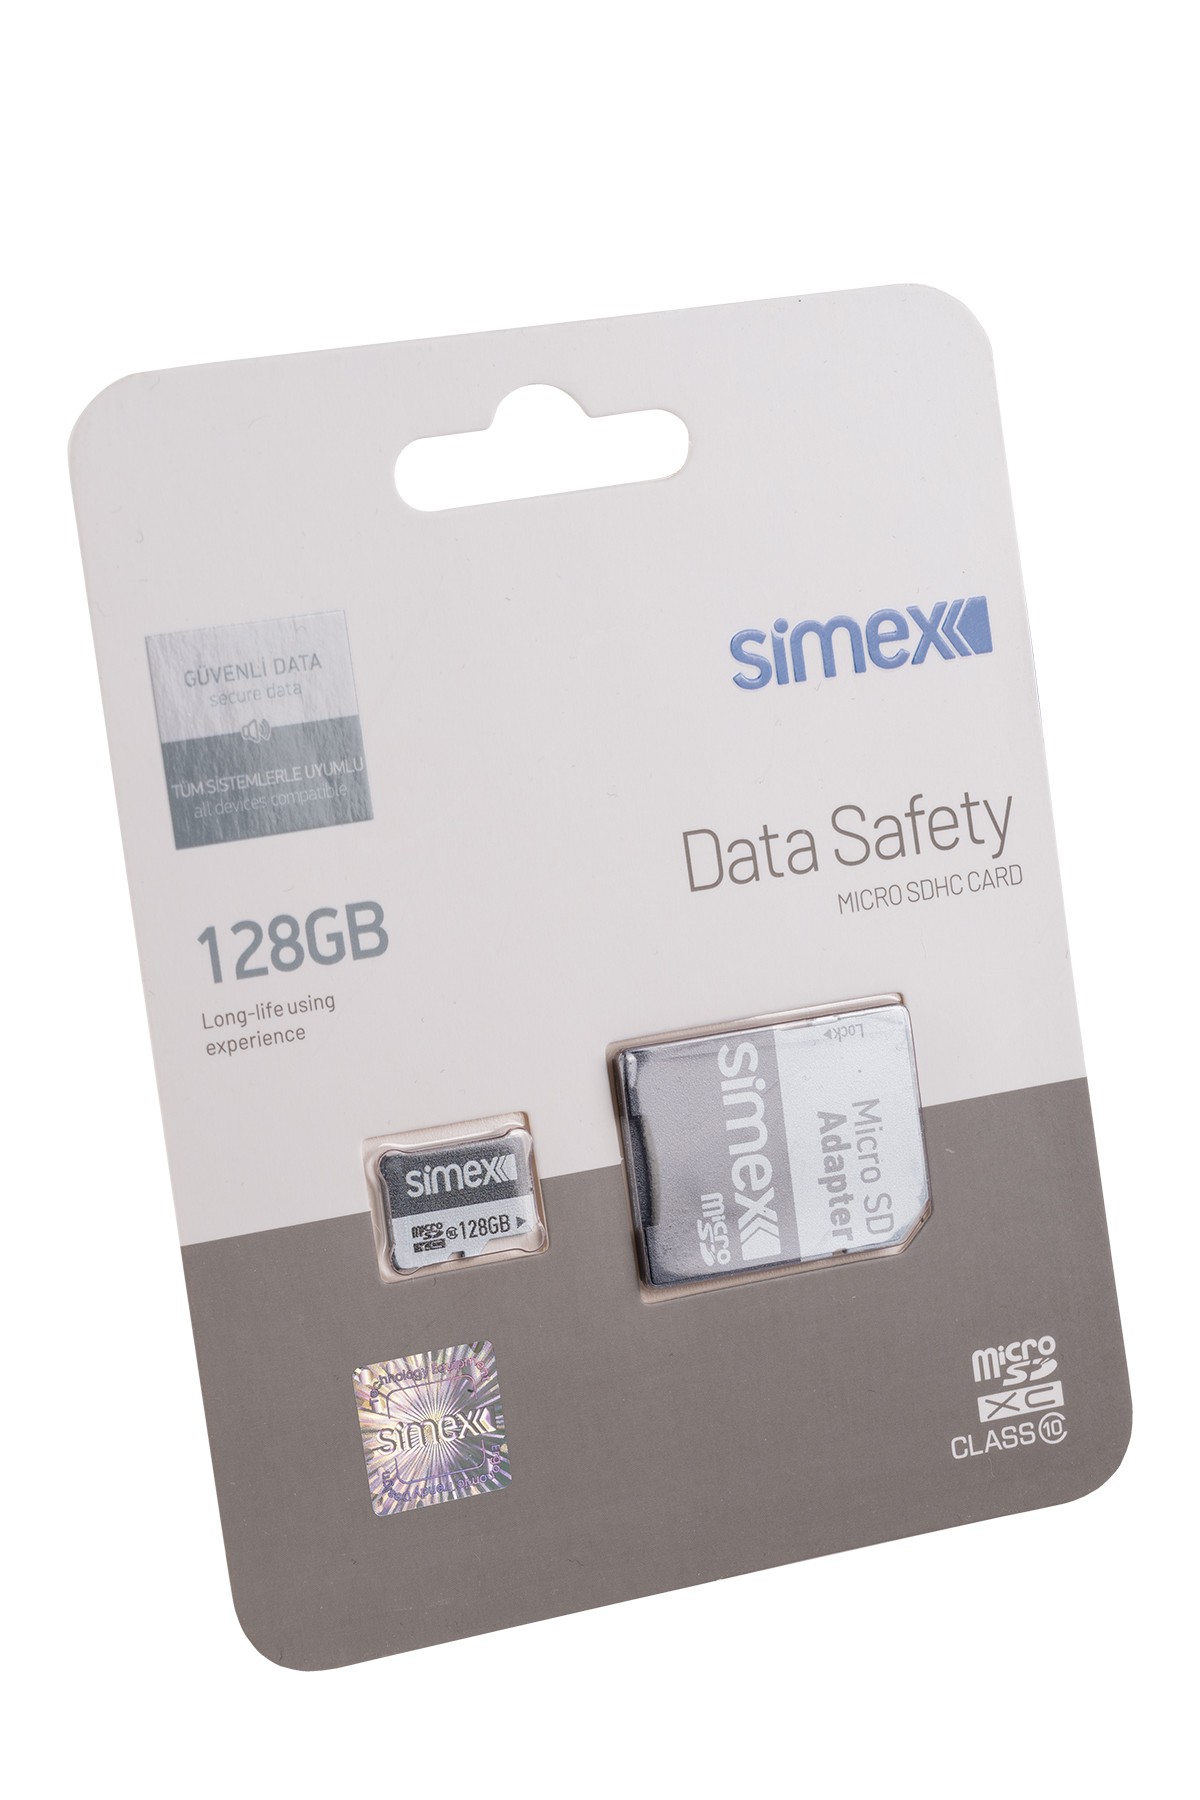 Simex SH-101 Data Safety Micro SD 128GB Hafıza Kartı